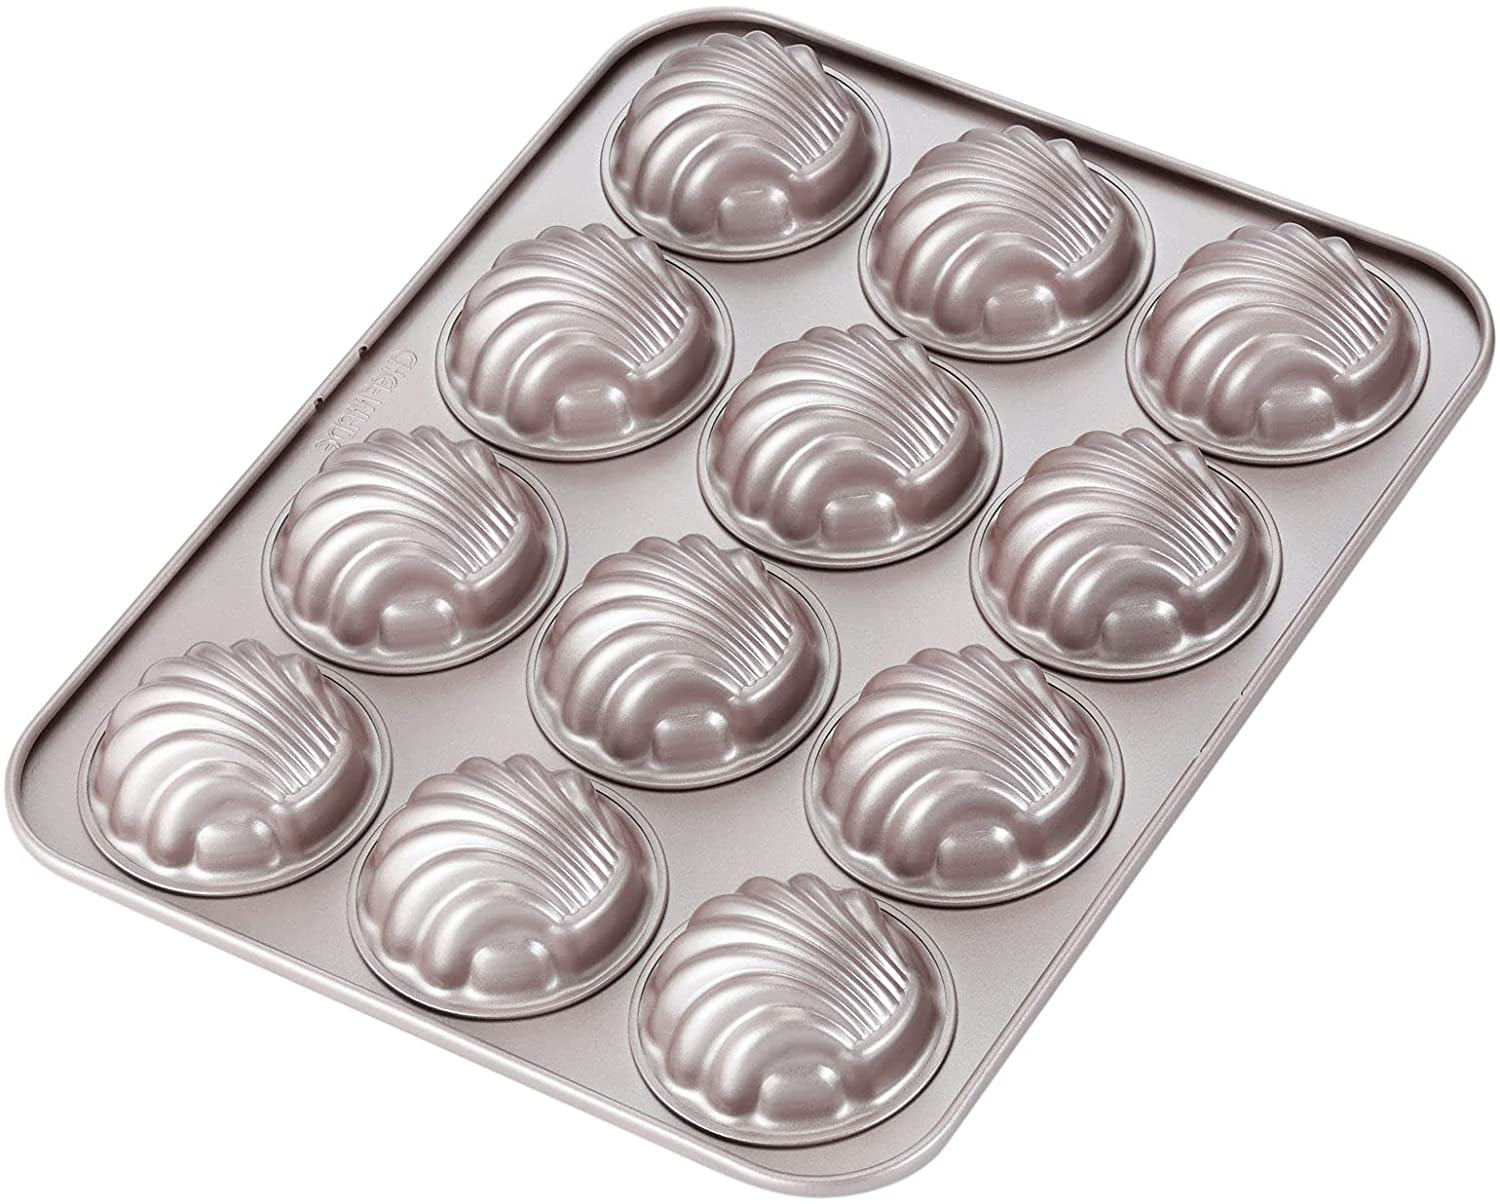 CGGYYZ 2 Pack Madeleine Pans for Baking, 12 Cavity Heavy Duty